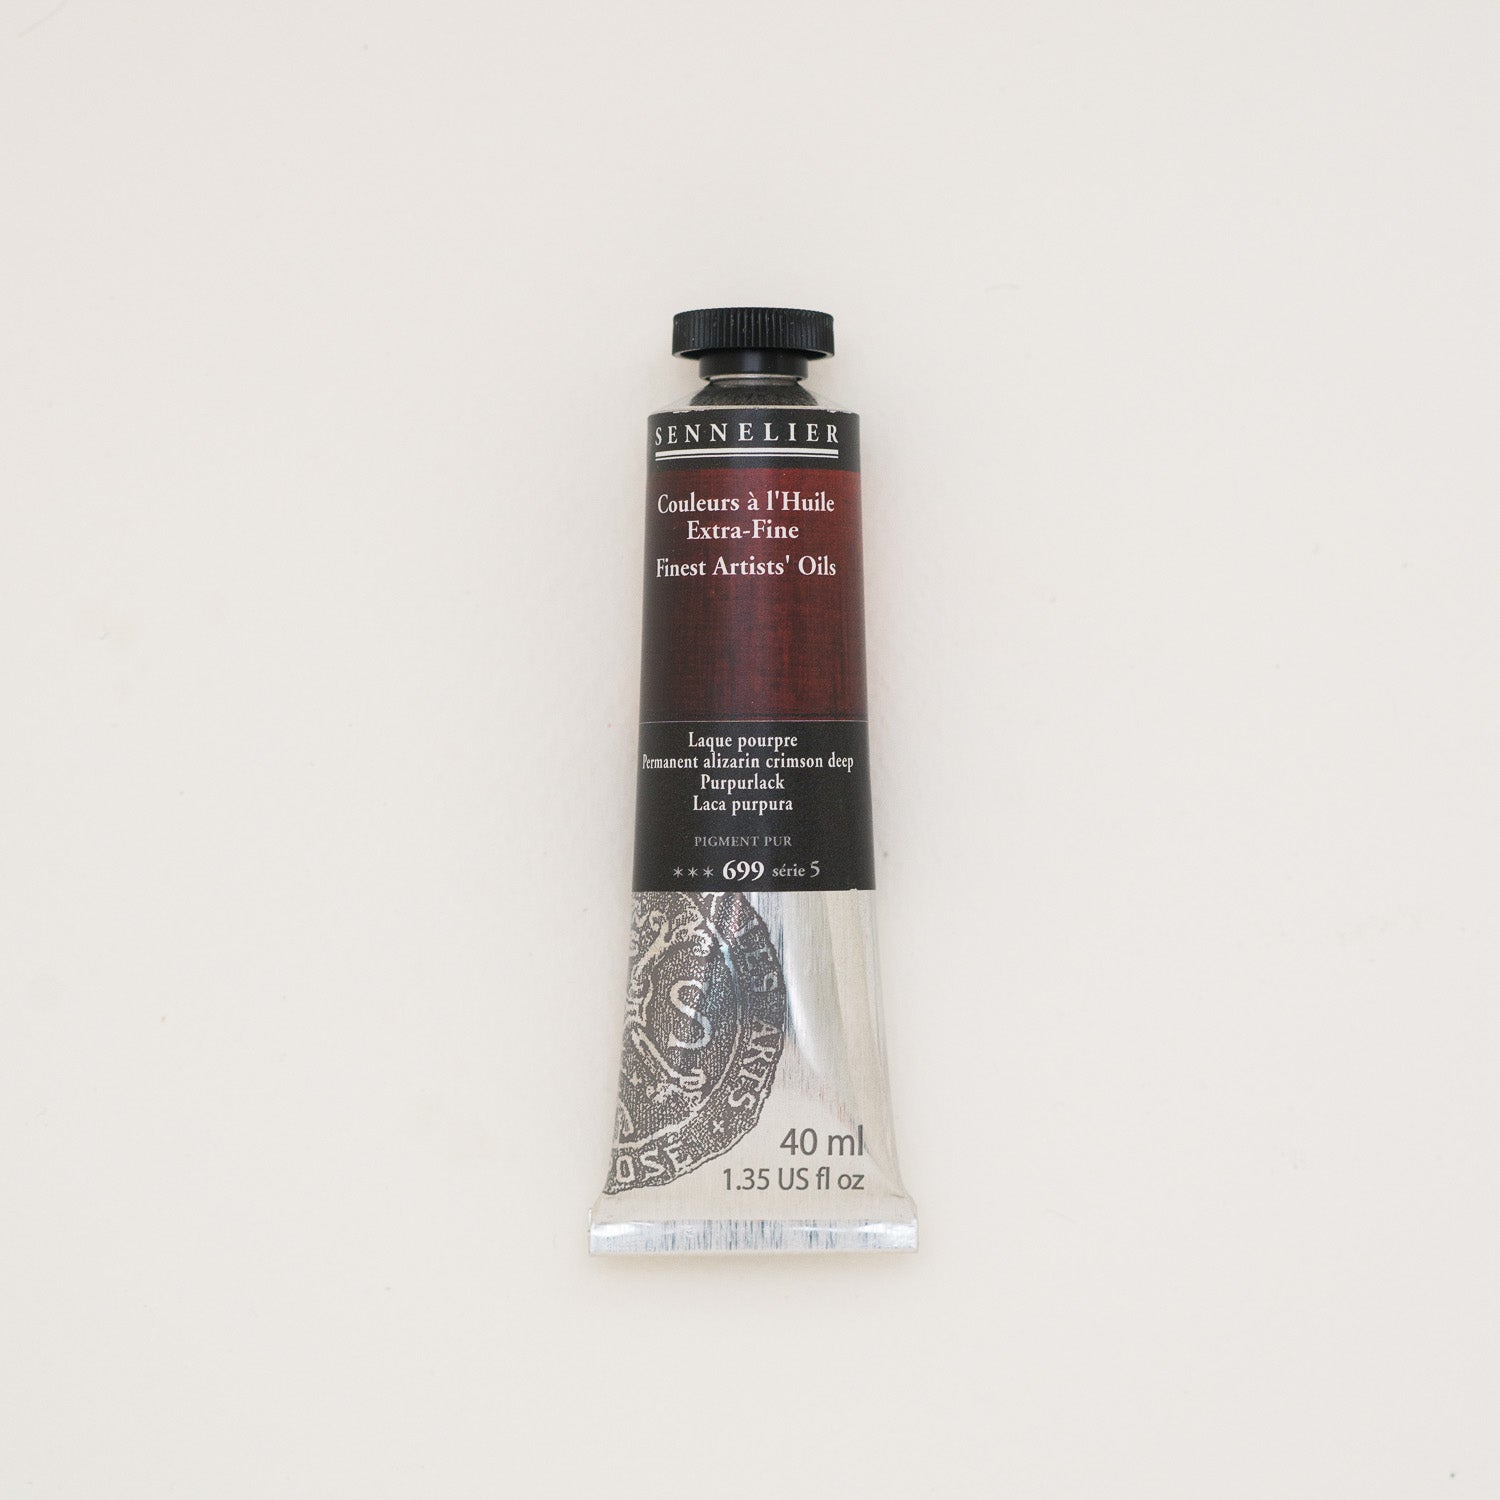 Sennelier Oil Paint 40ml - Series 5 - Melbourne Etching Supplies